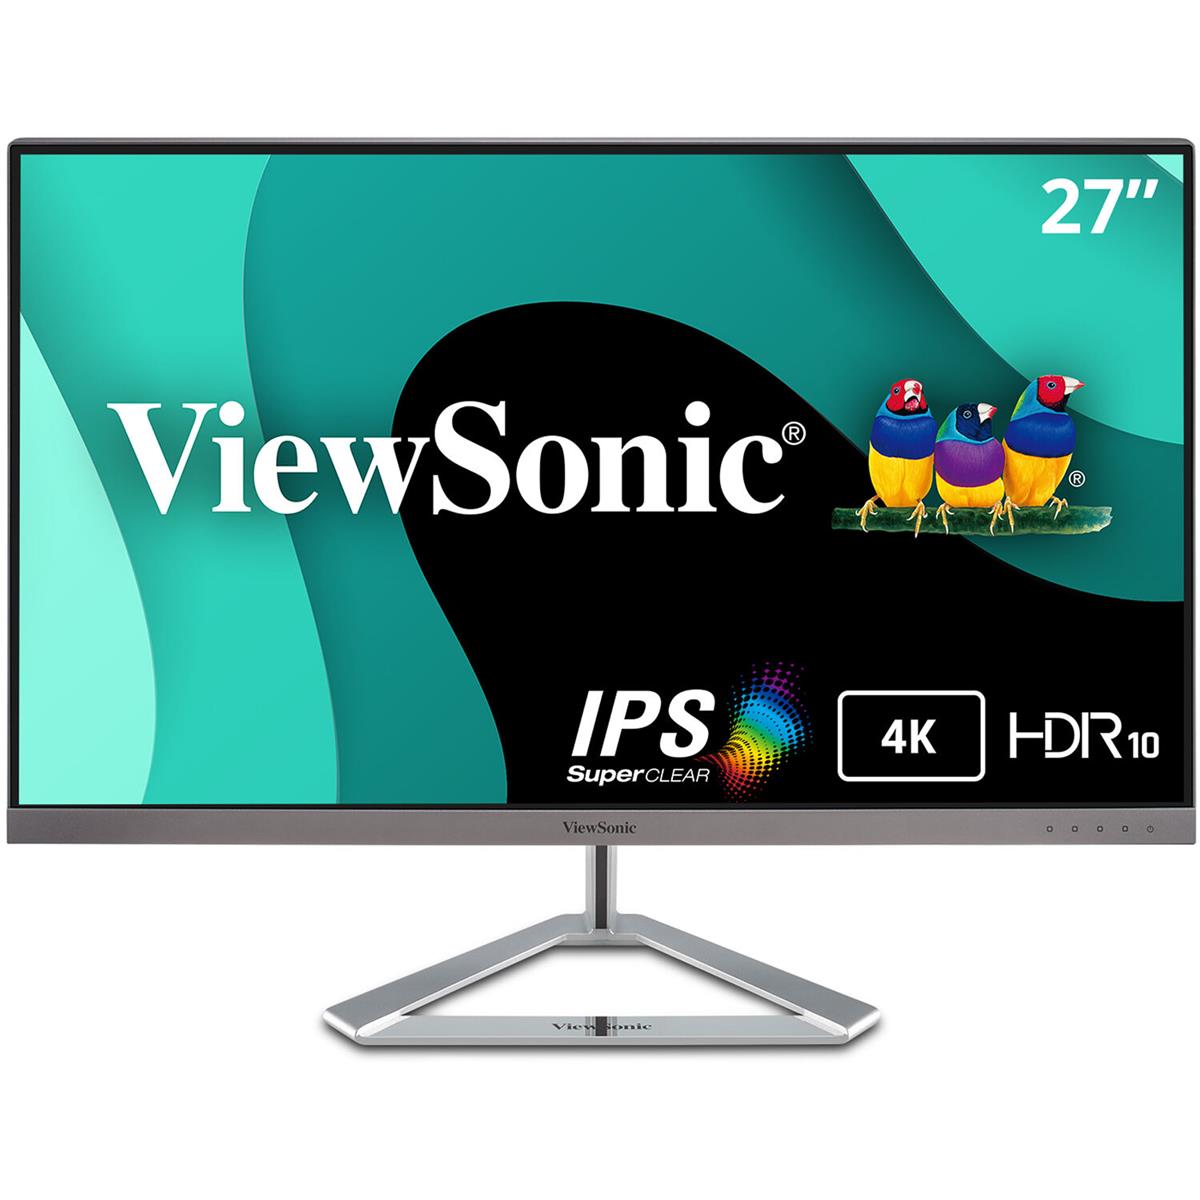 27" 16:9 4K UHD Frameless IPS LED Monitor - ViewSonic VX2776-4K-MHD